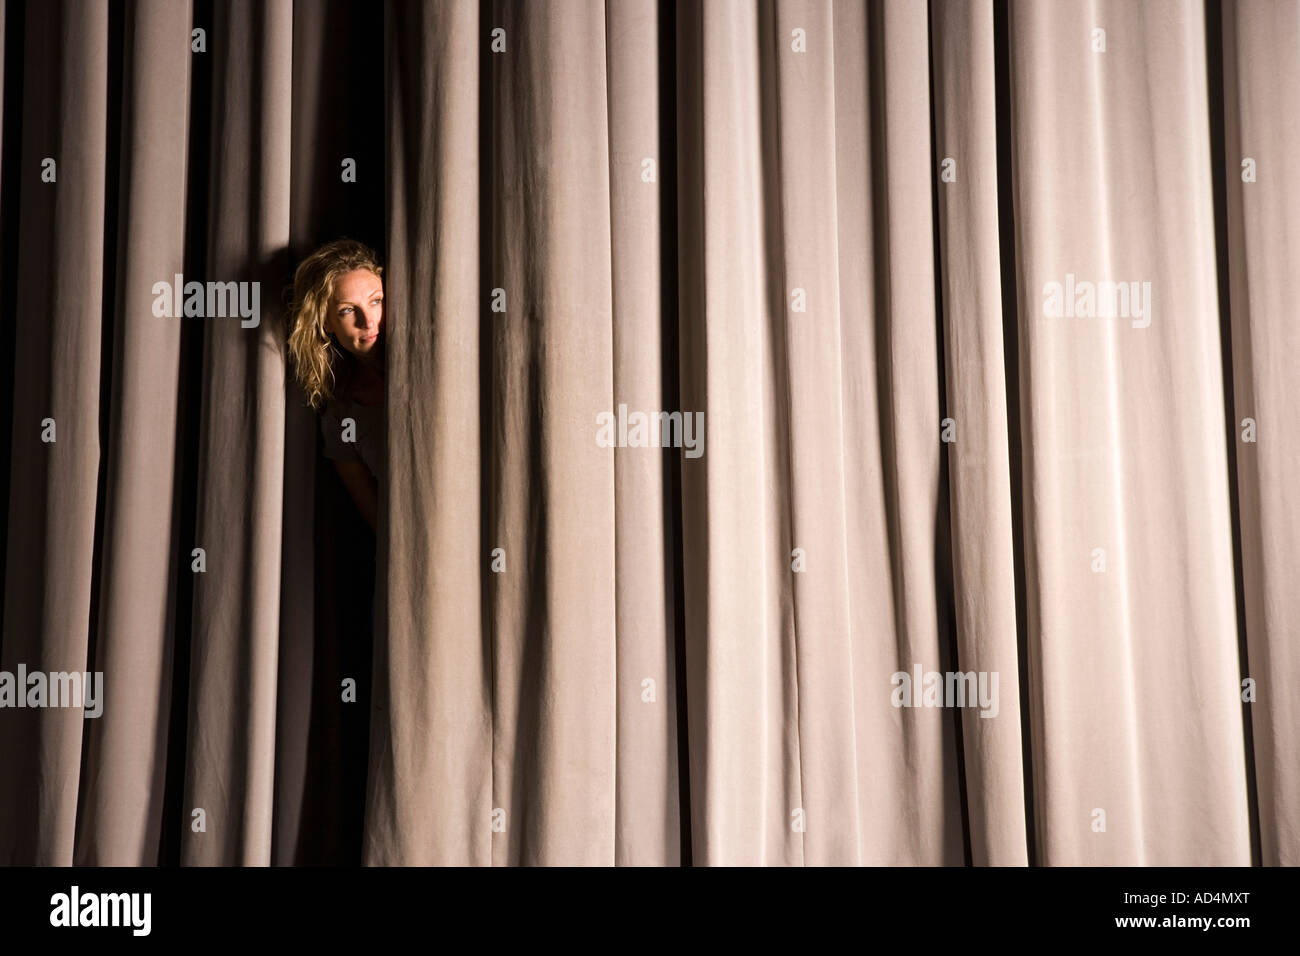 A woman peeking through a stage curtain Stock Photo